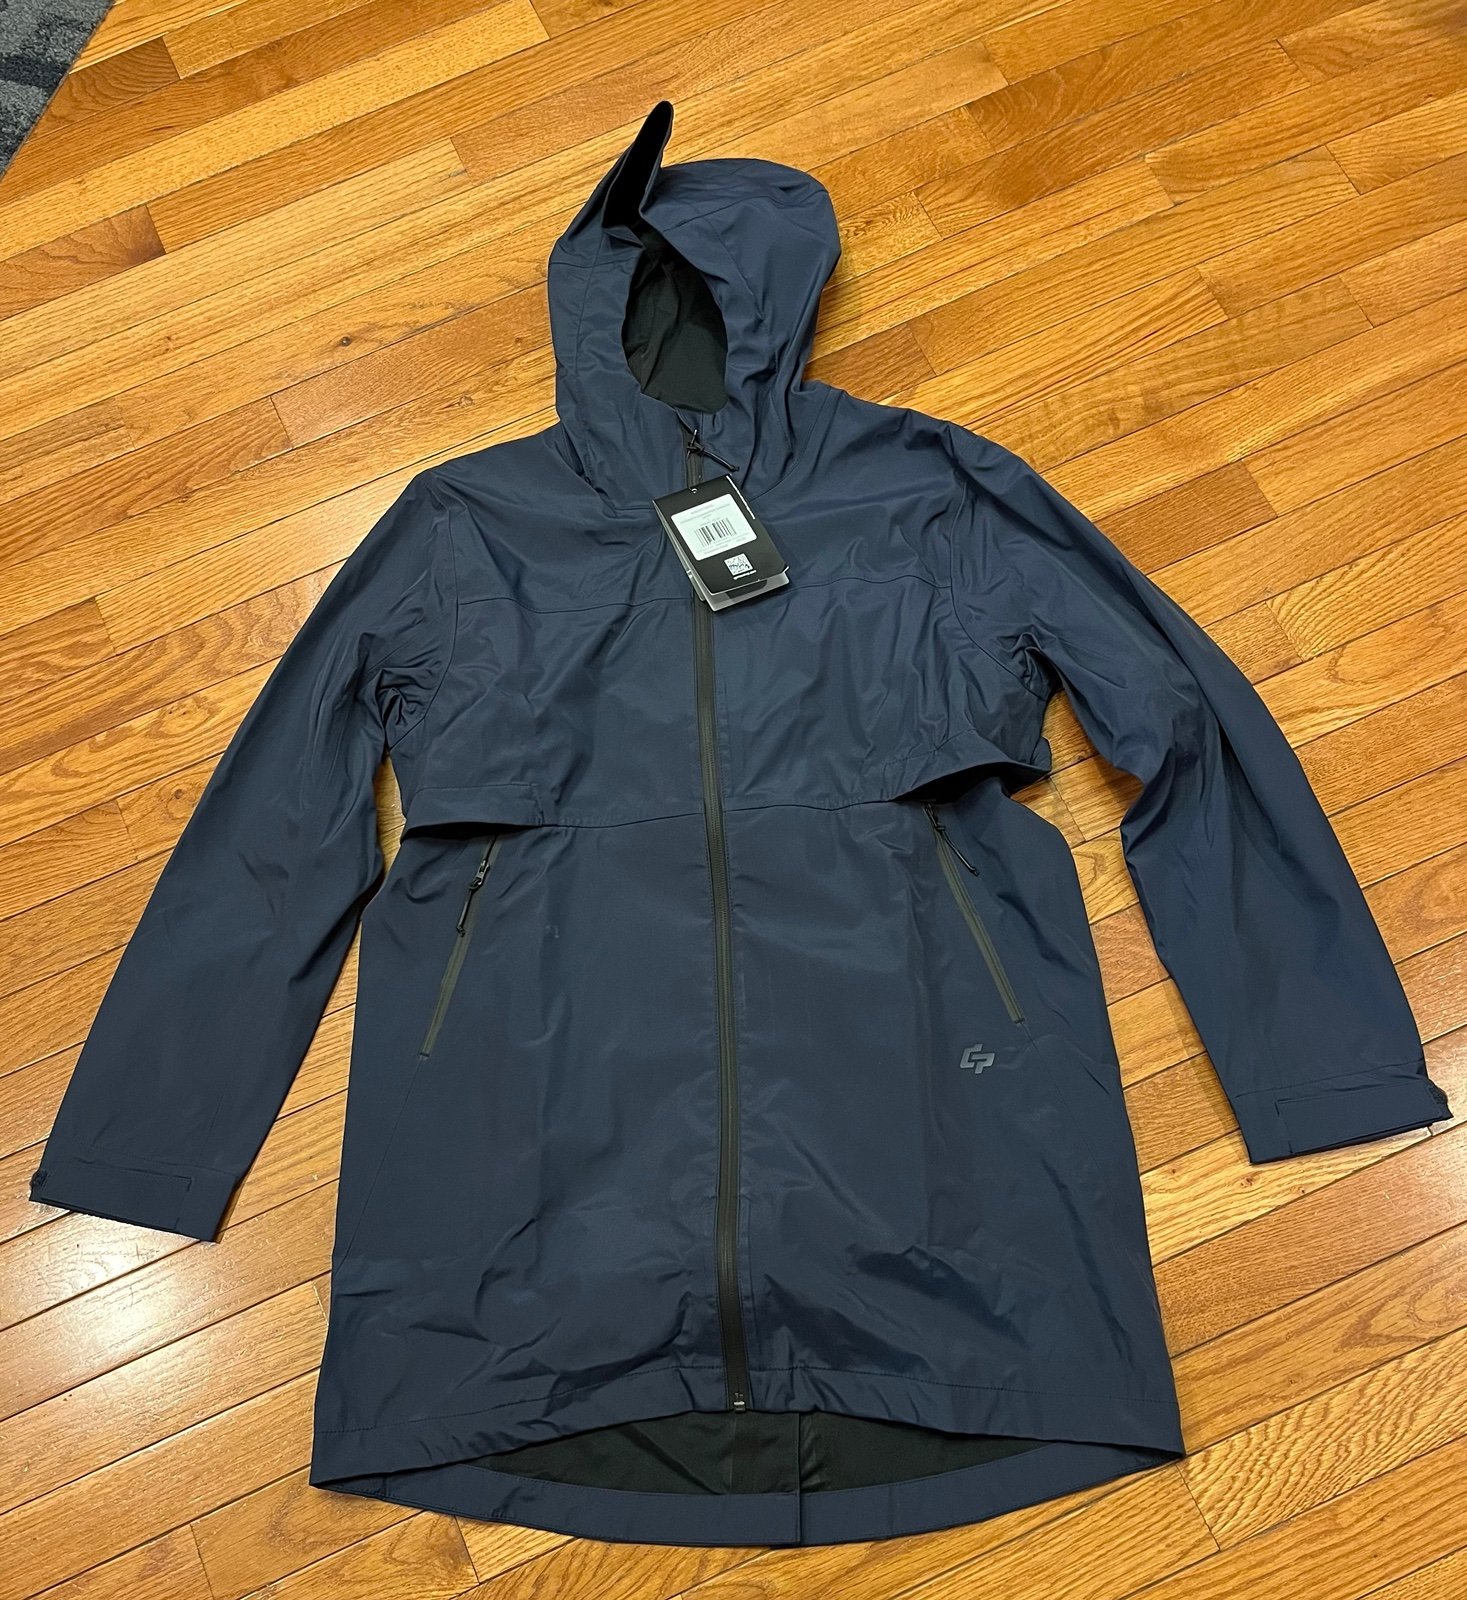 Popular Navy rain jacket  Size large but fits like size